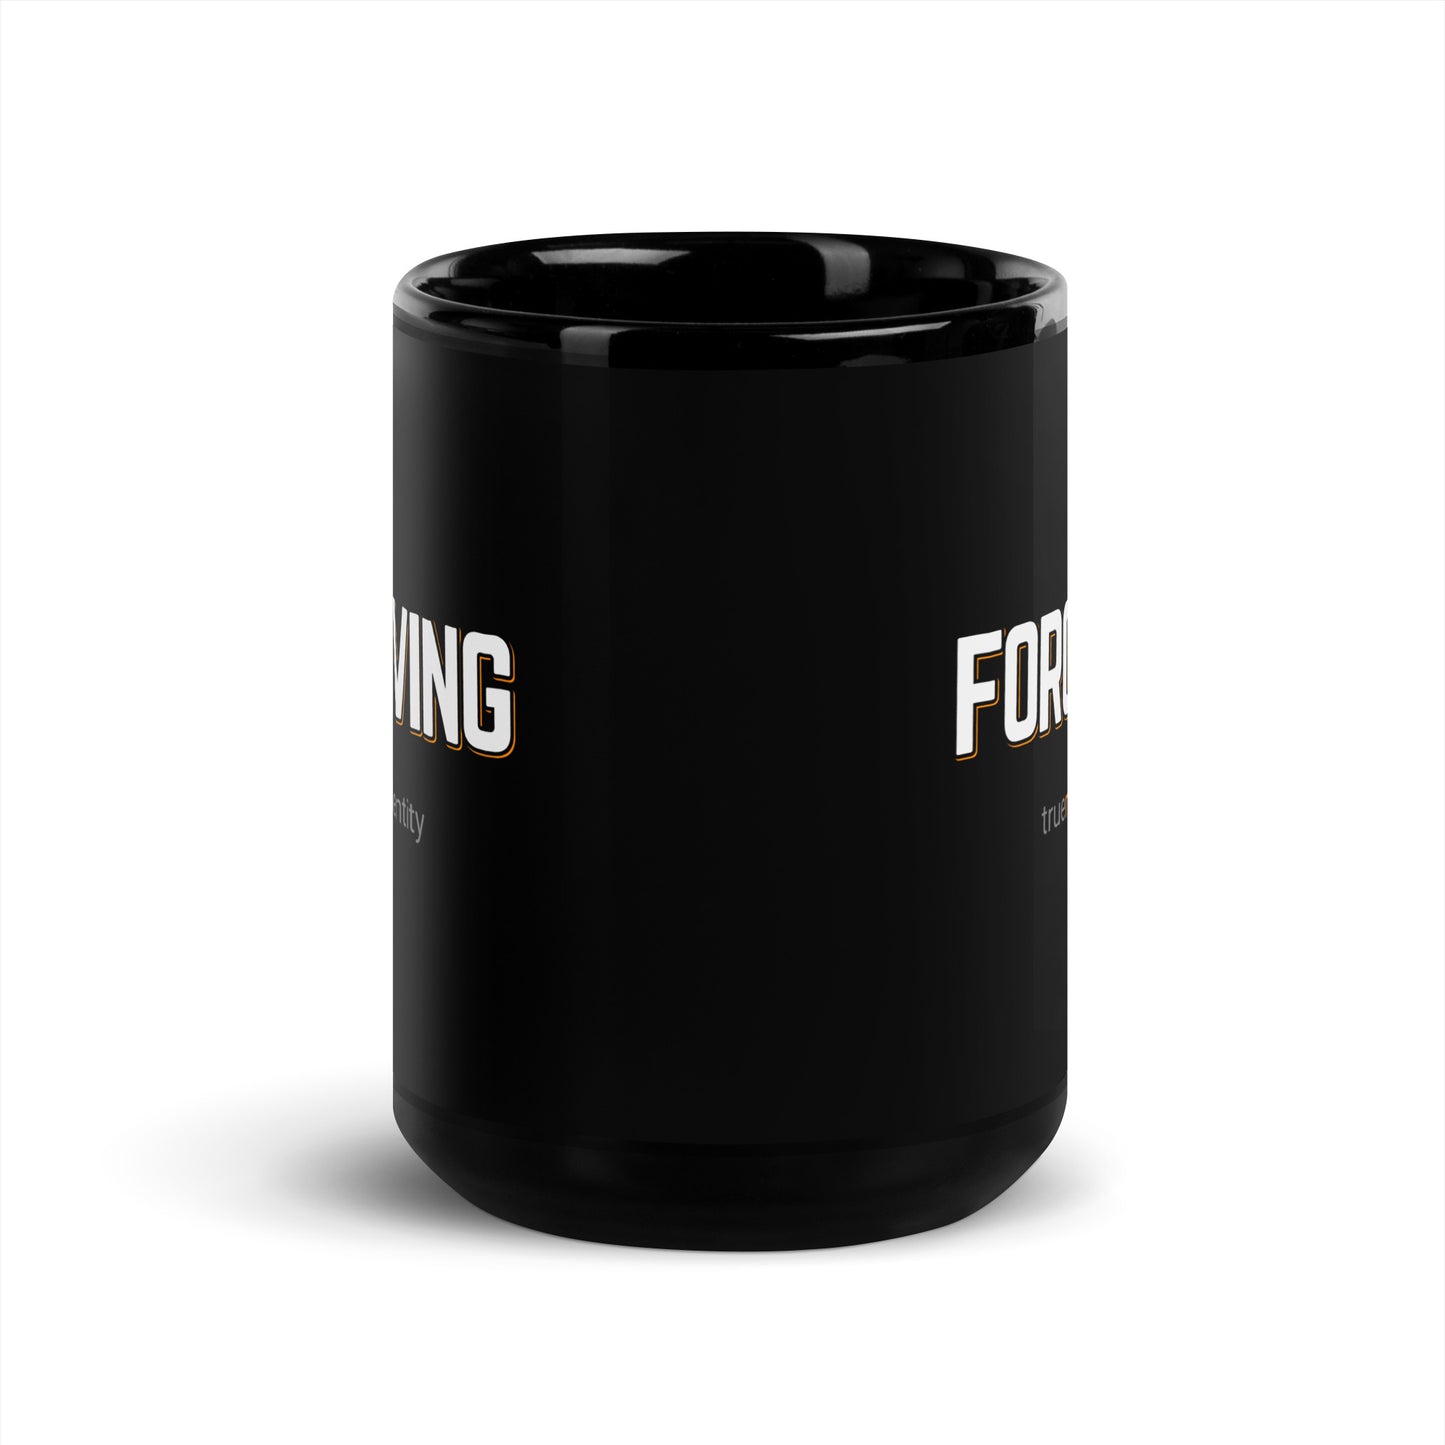 FORGIVING Black Coffee Mug Bold 11 oz or 15 oz